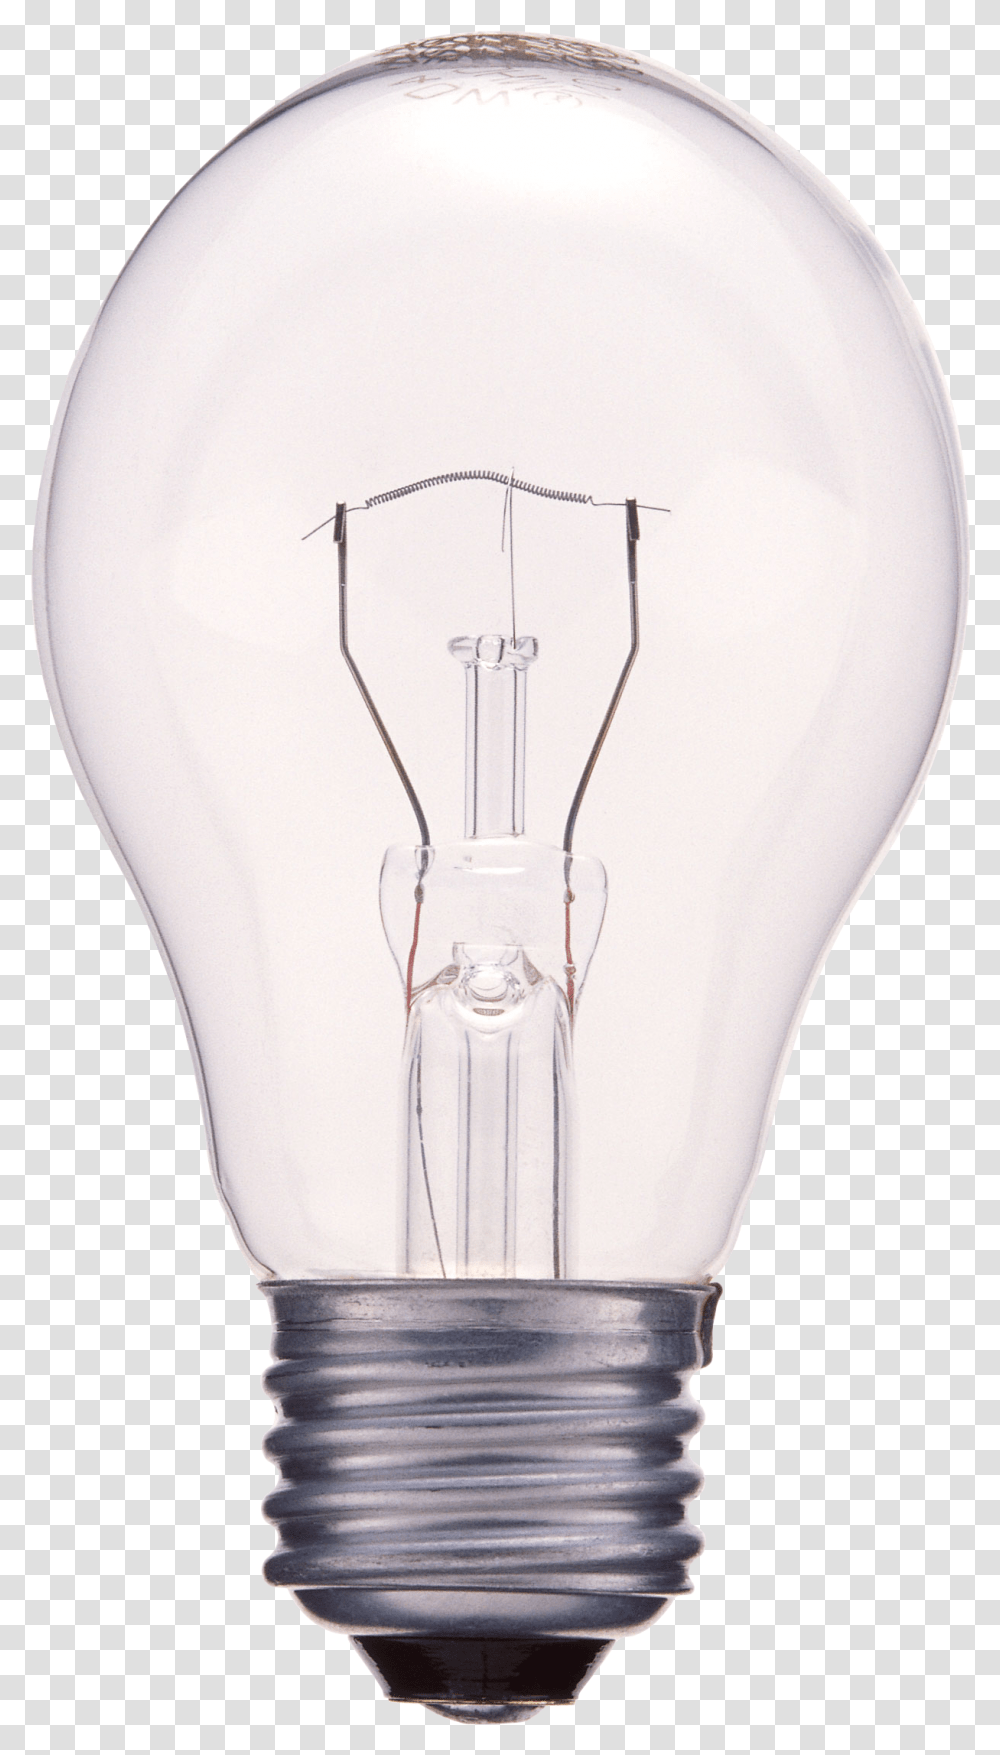 Electric Lamp Image Incandescent Light Bulb, Lightbulb, Mixer, Appliance Transparent Png